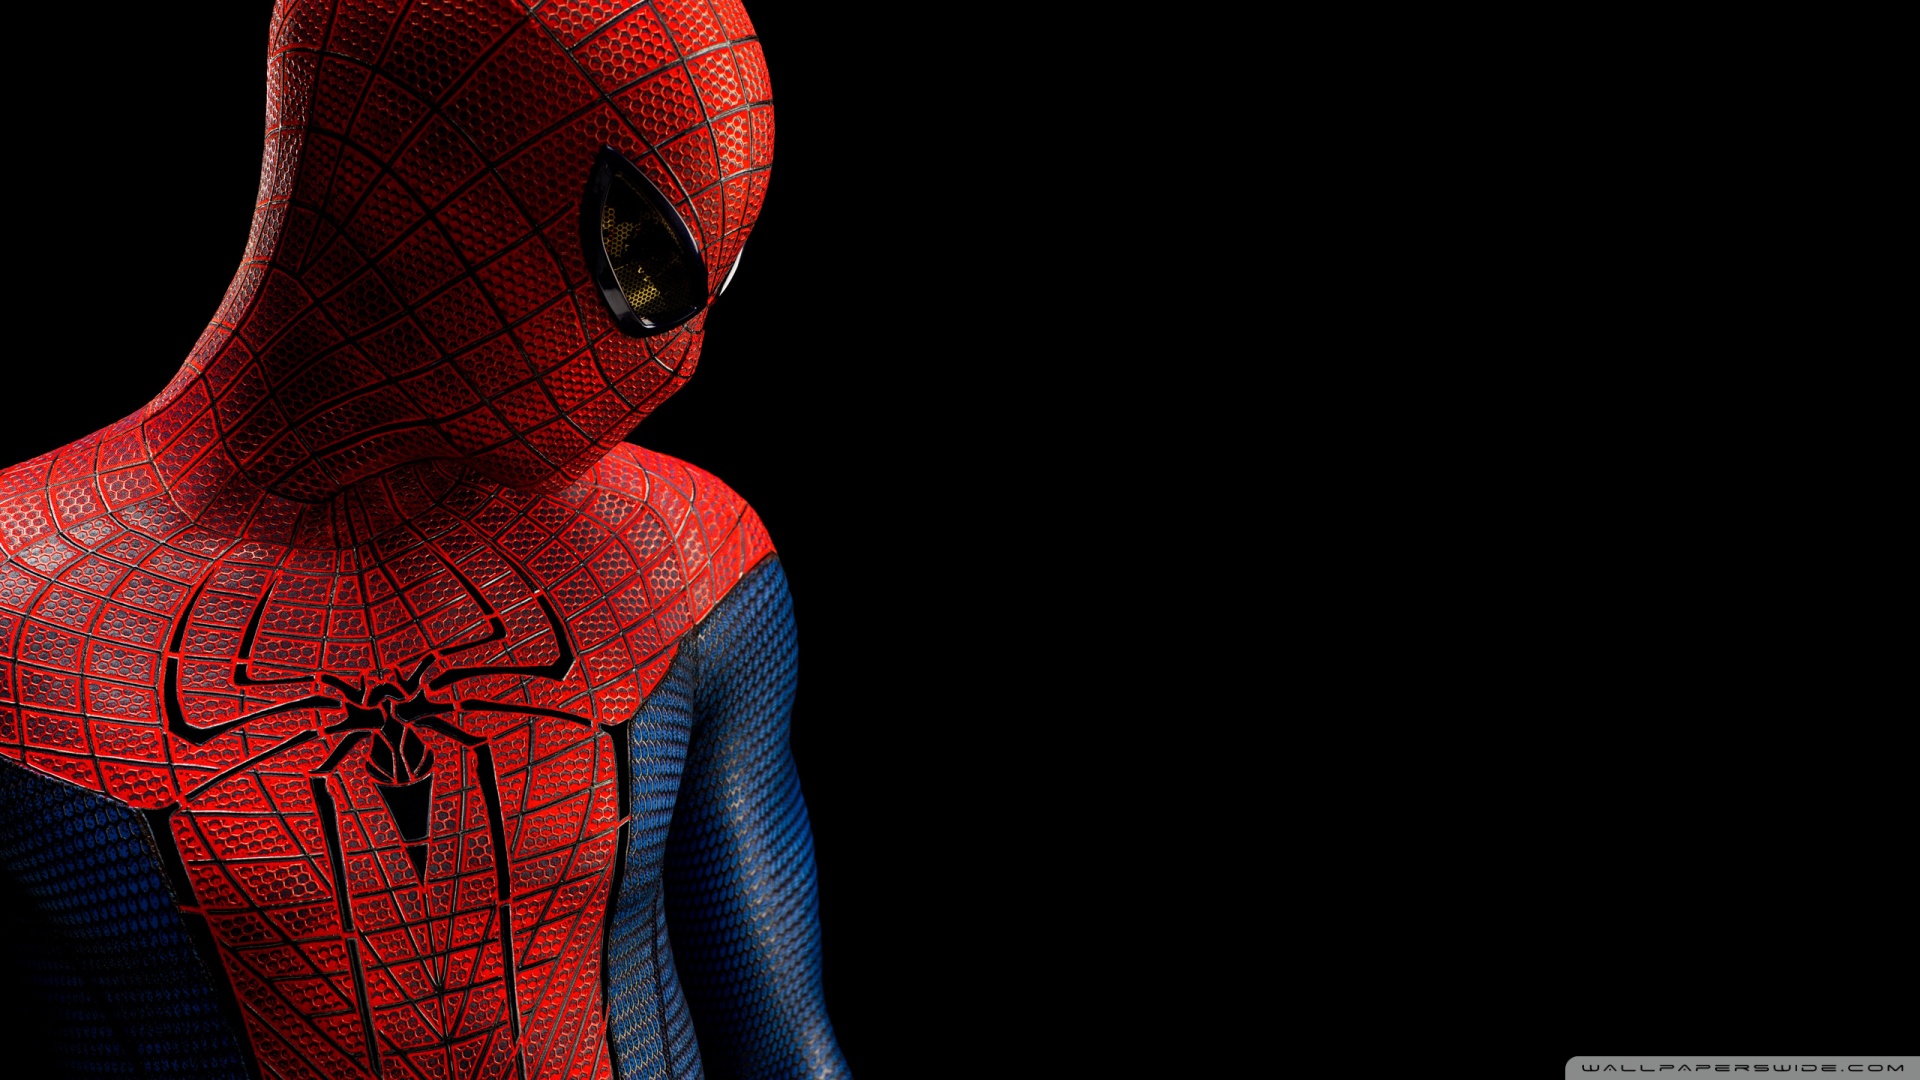 Spider-Man swinging through the city, ready for heroic adventures. #Comics #DesktopWallpaper